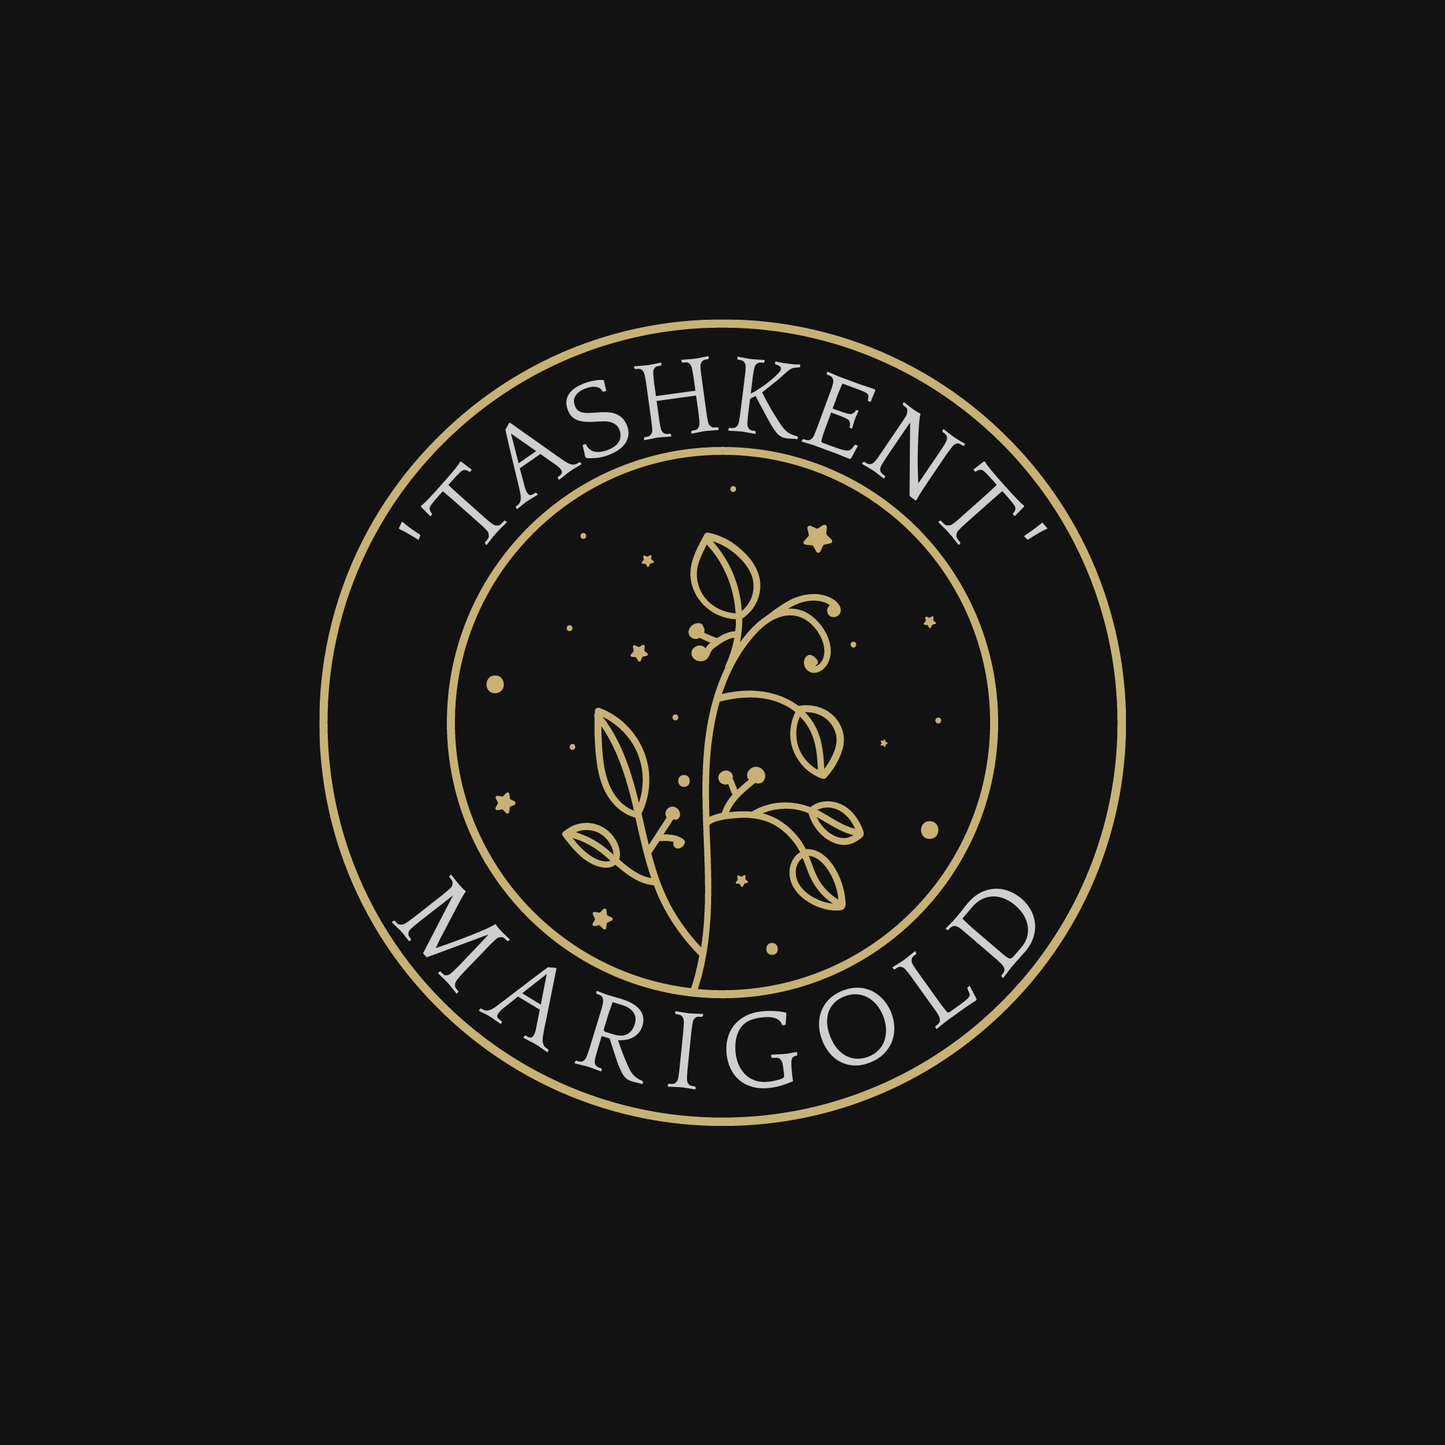 Tashkent Marigold Seeds